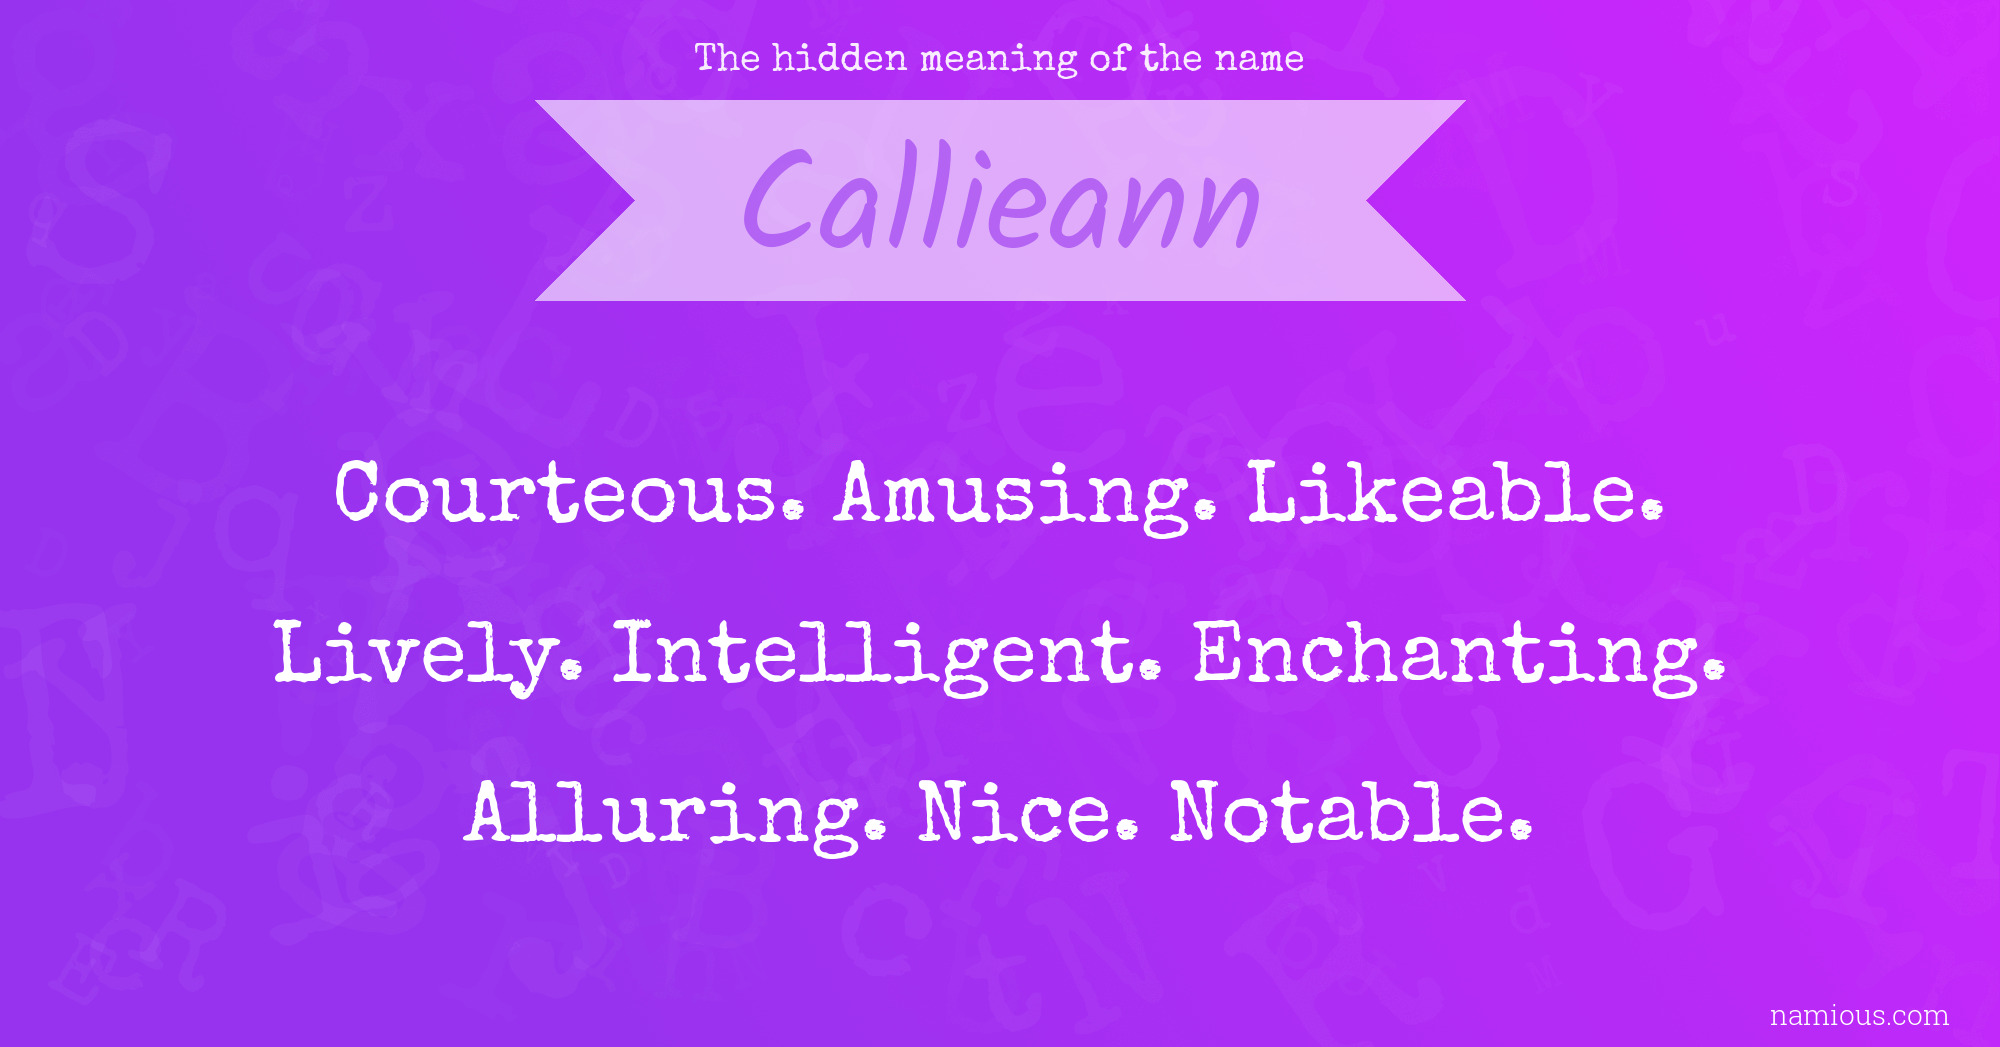 The hidden meaning of the name Callieann